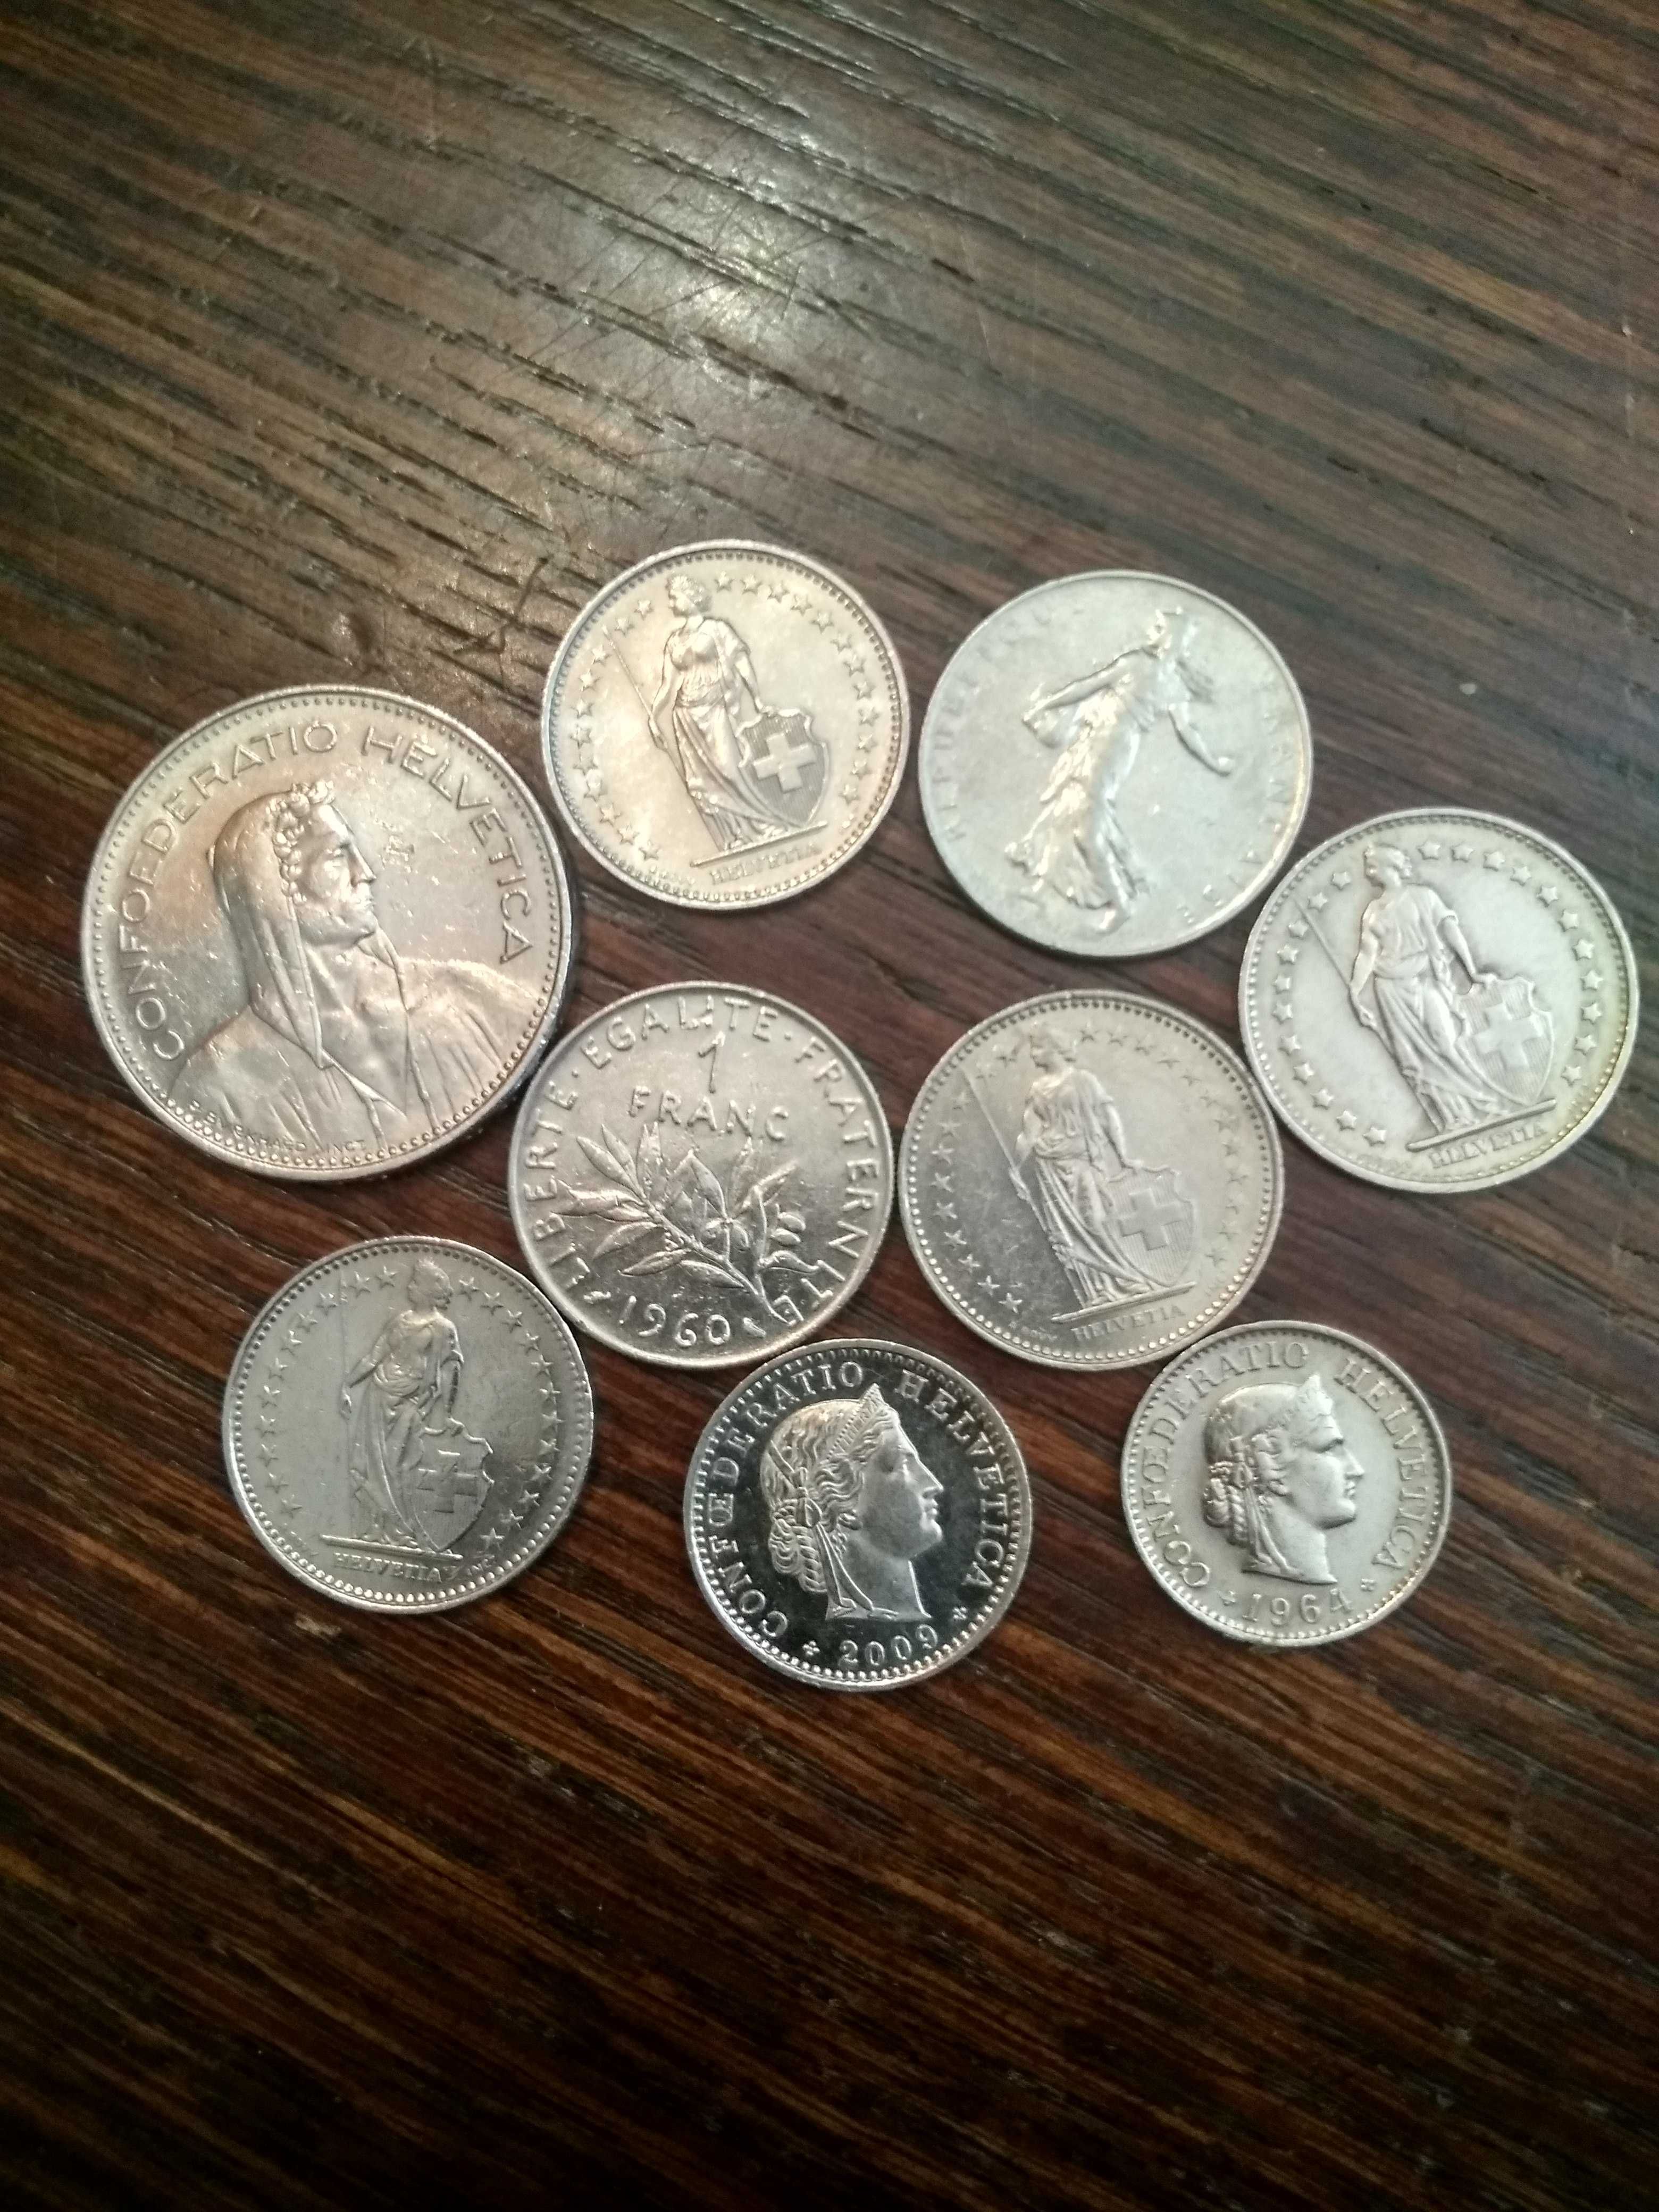 Коллекция разных монет (GBP,Frank,Euro)